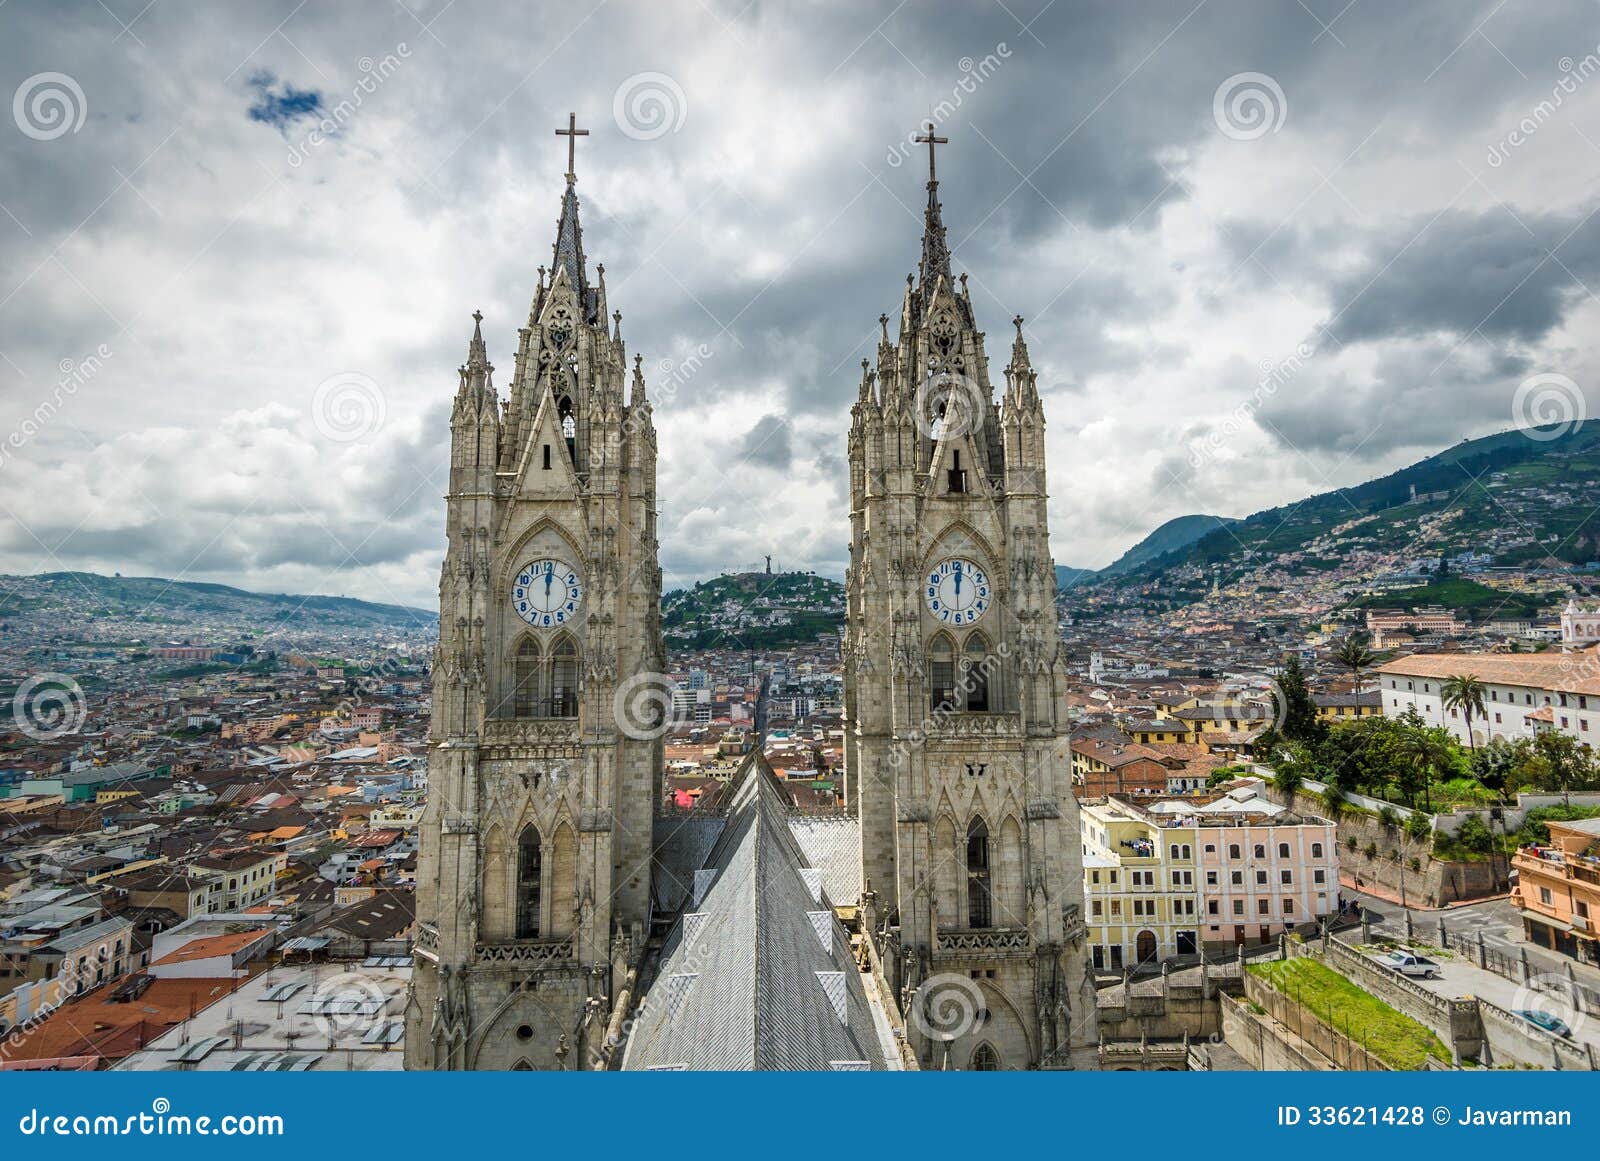 Gothic Basilica del Voto Nacional, Quito, Ecuador